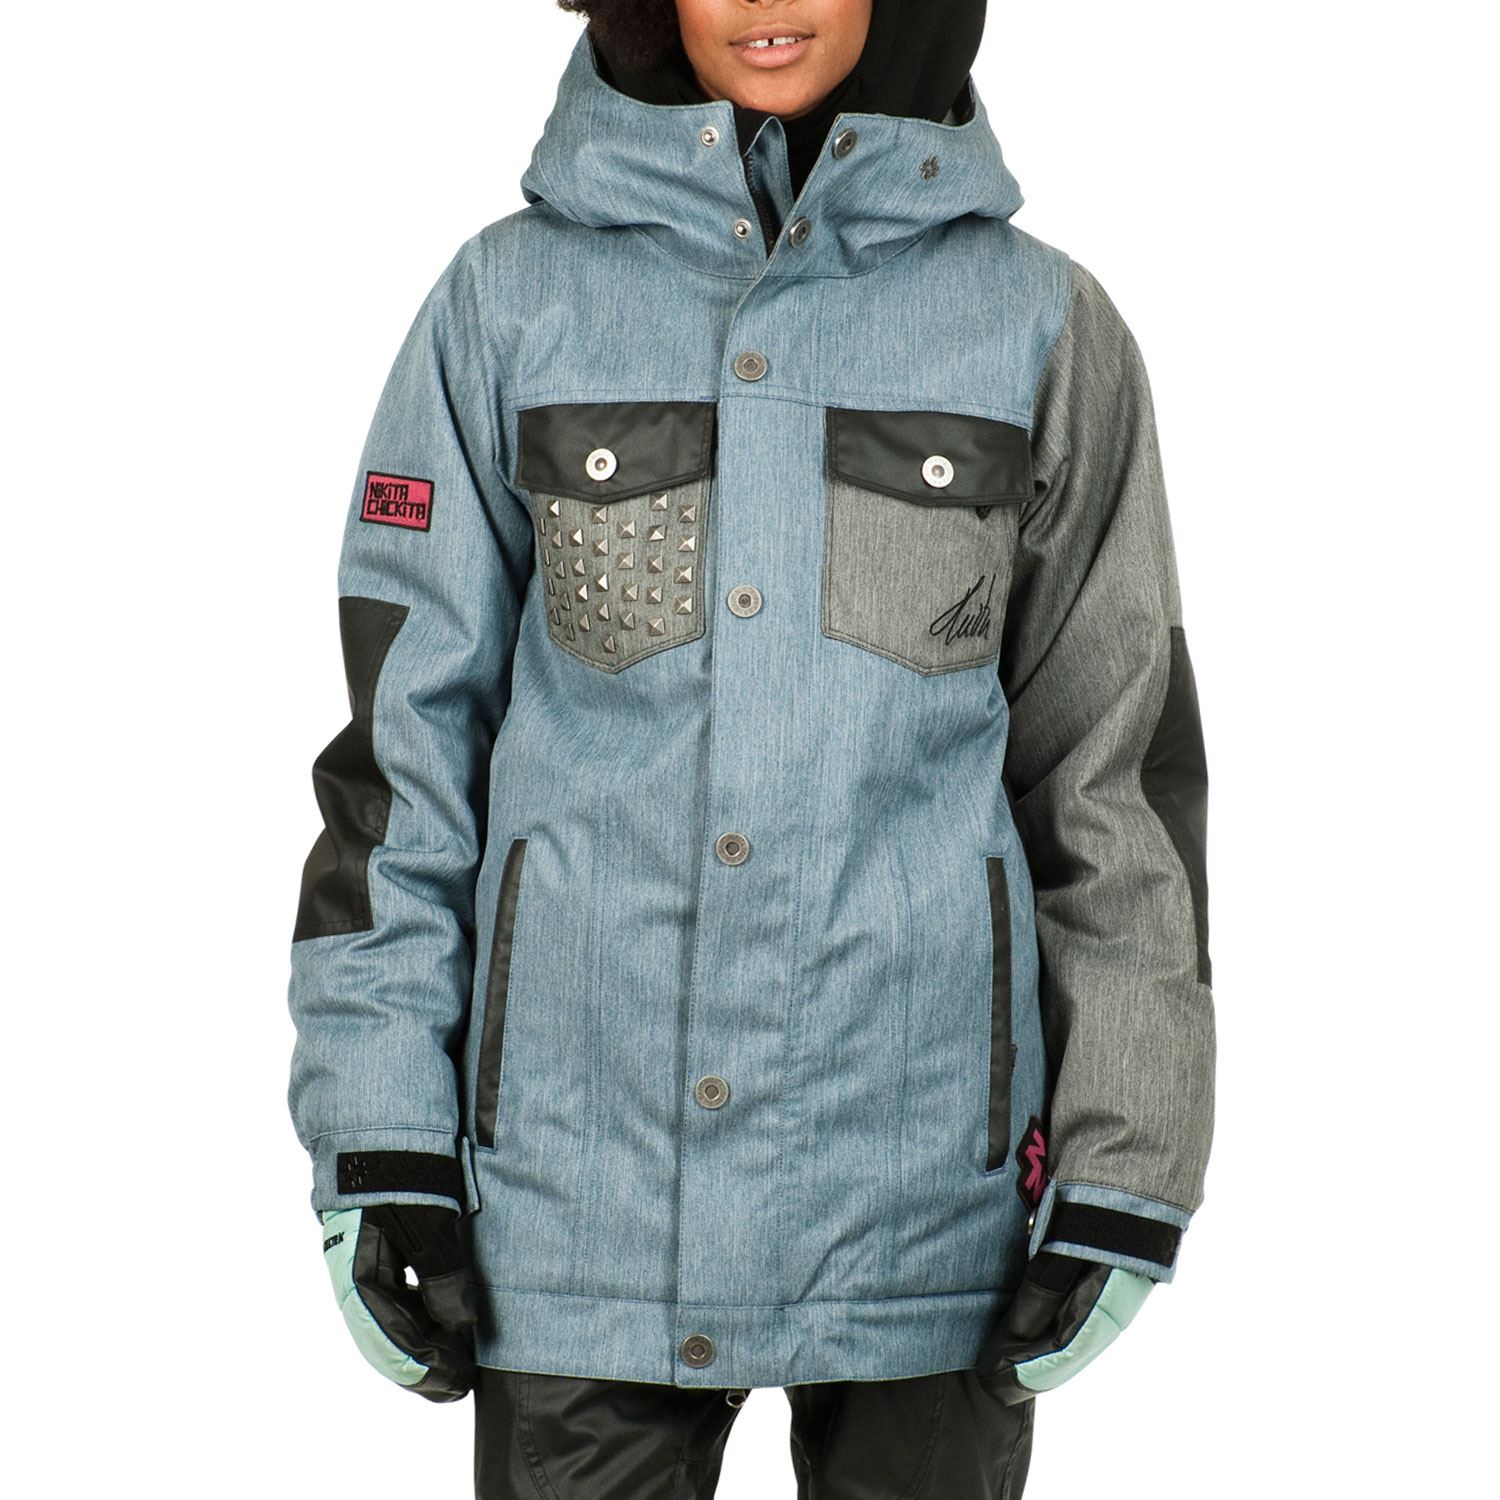 womens snowboarding jackets nikita katla jacket (denimblue/jet black) womenu0027s snowboard jacket rtgyrbu